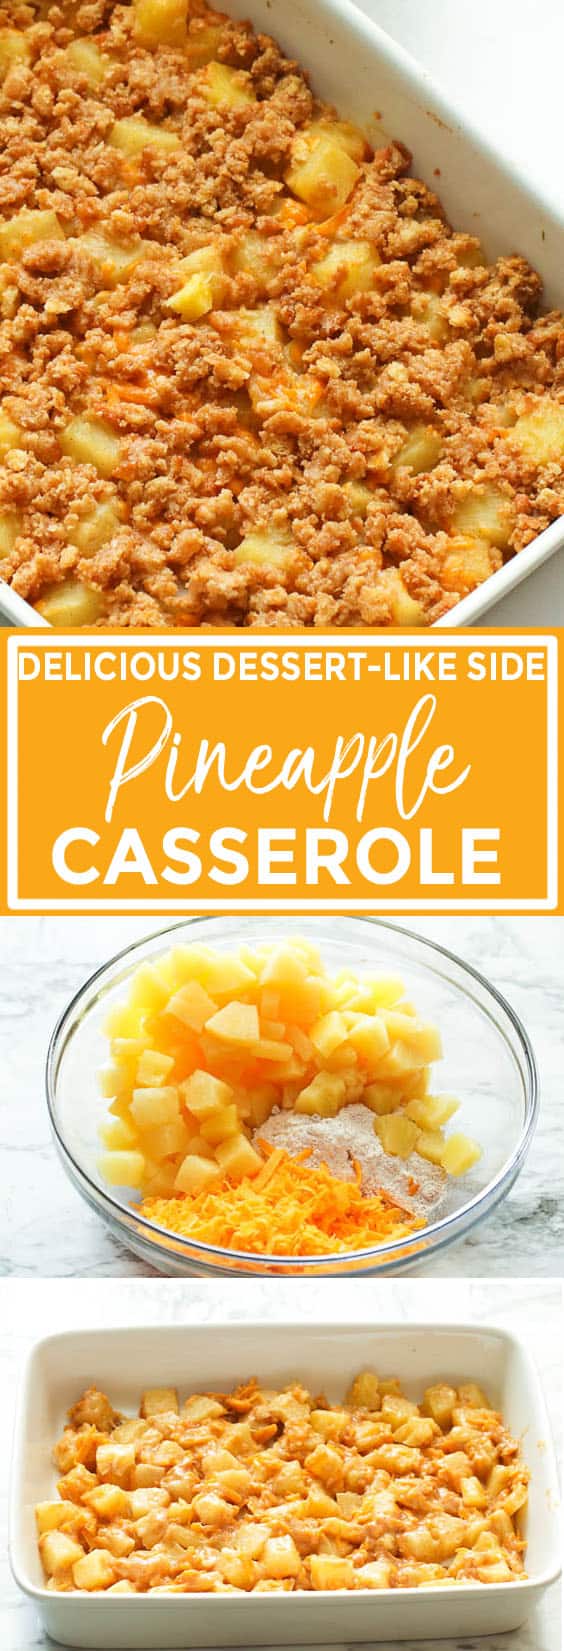 Pineapple Casserole